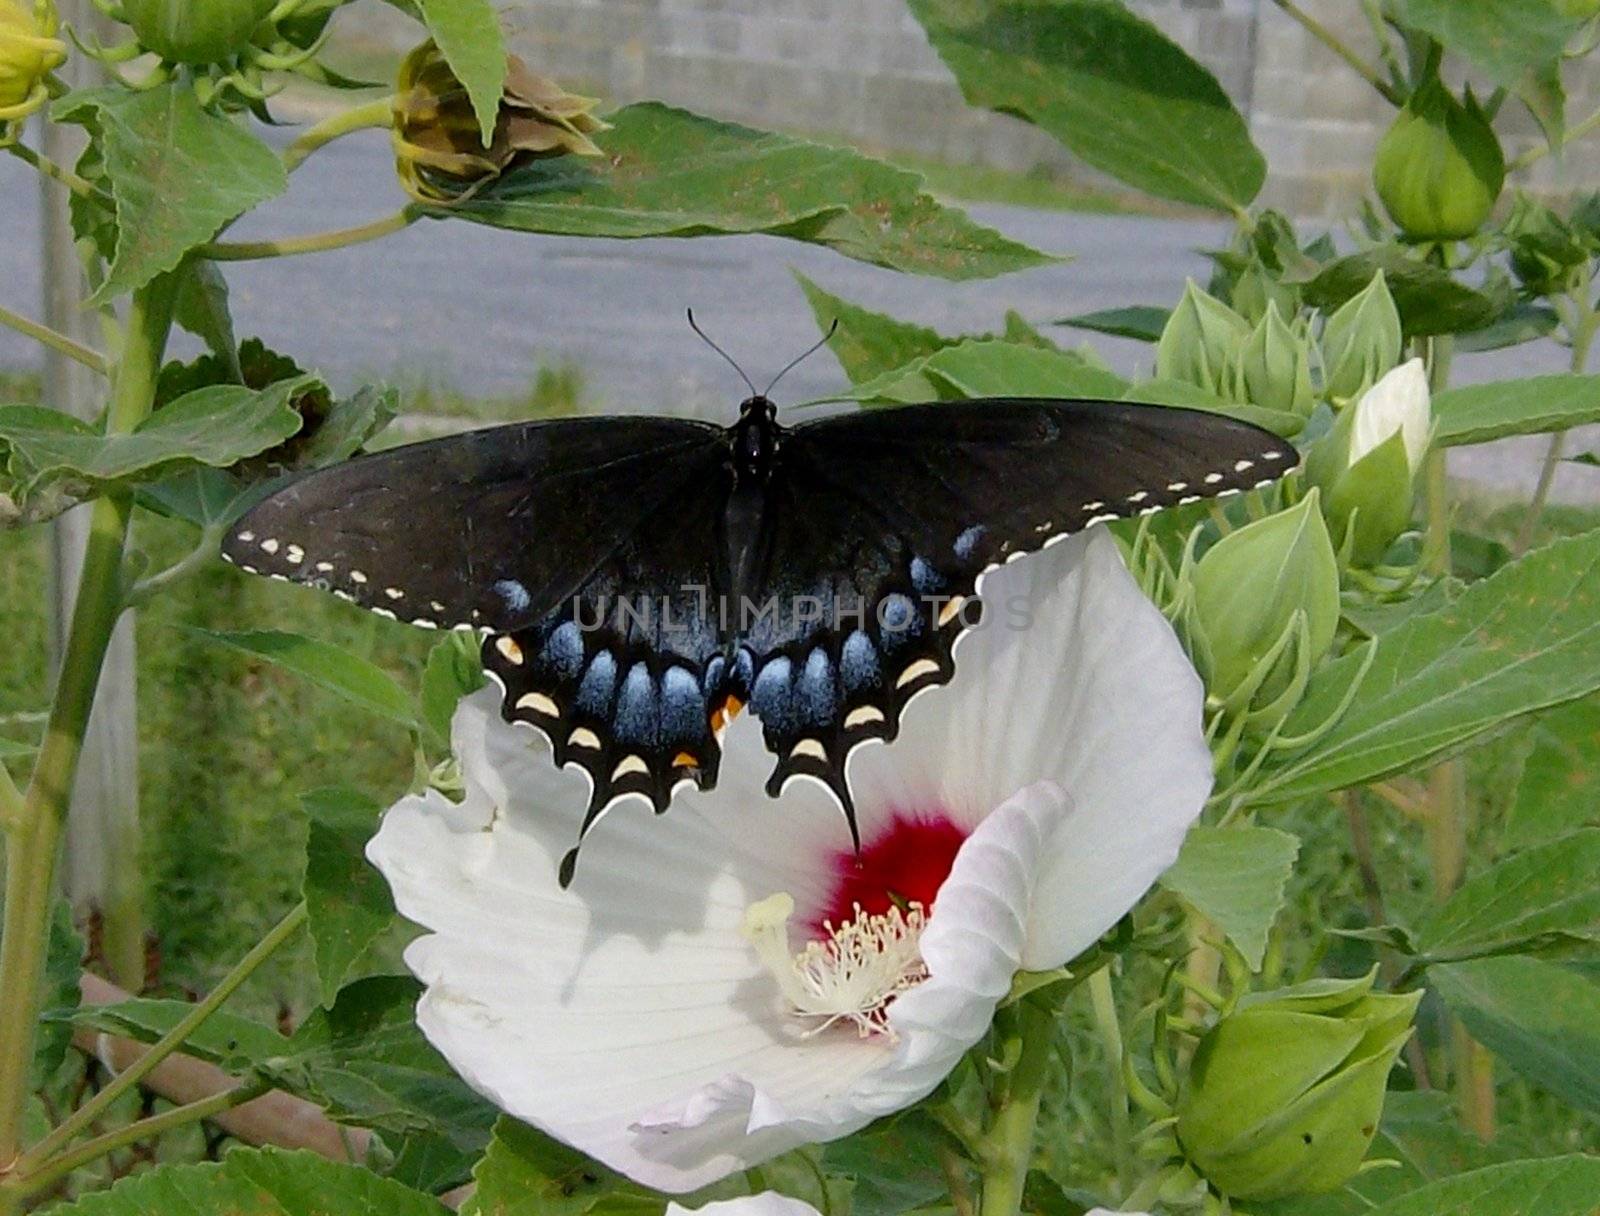 Black Swallowtail on White Marshmallow by xplorer1959@hotmail.com